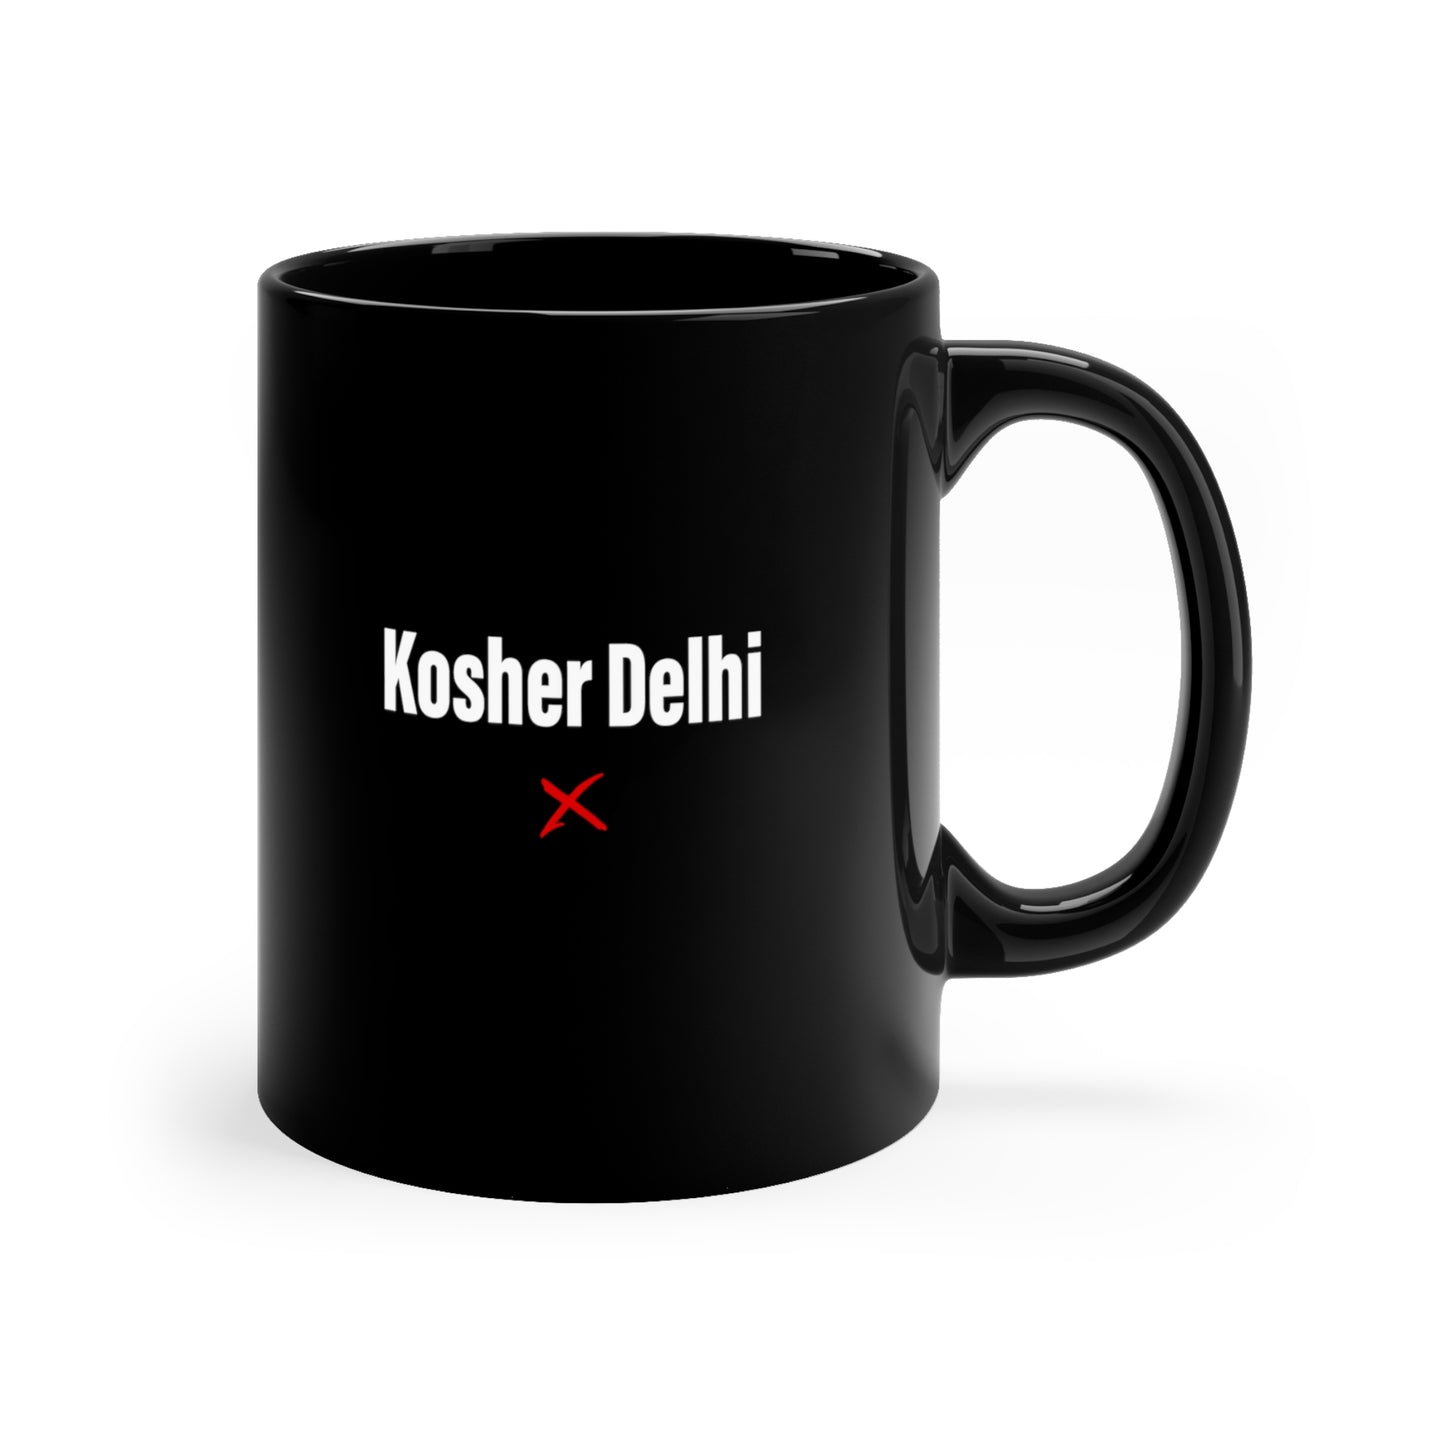 Kosher Delhi - Mug